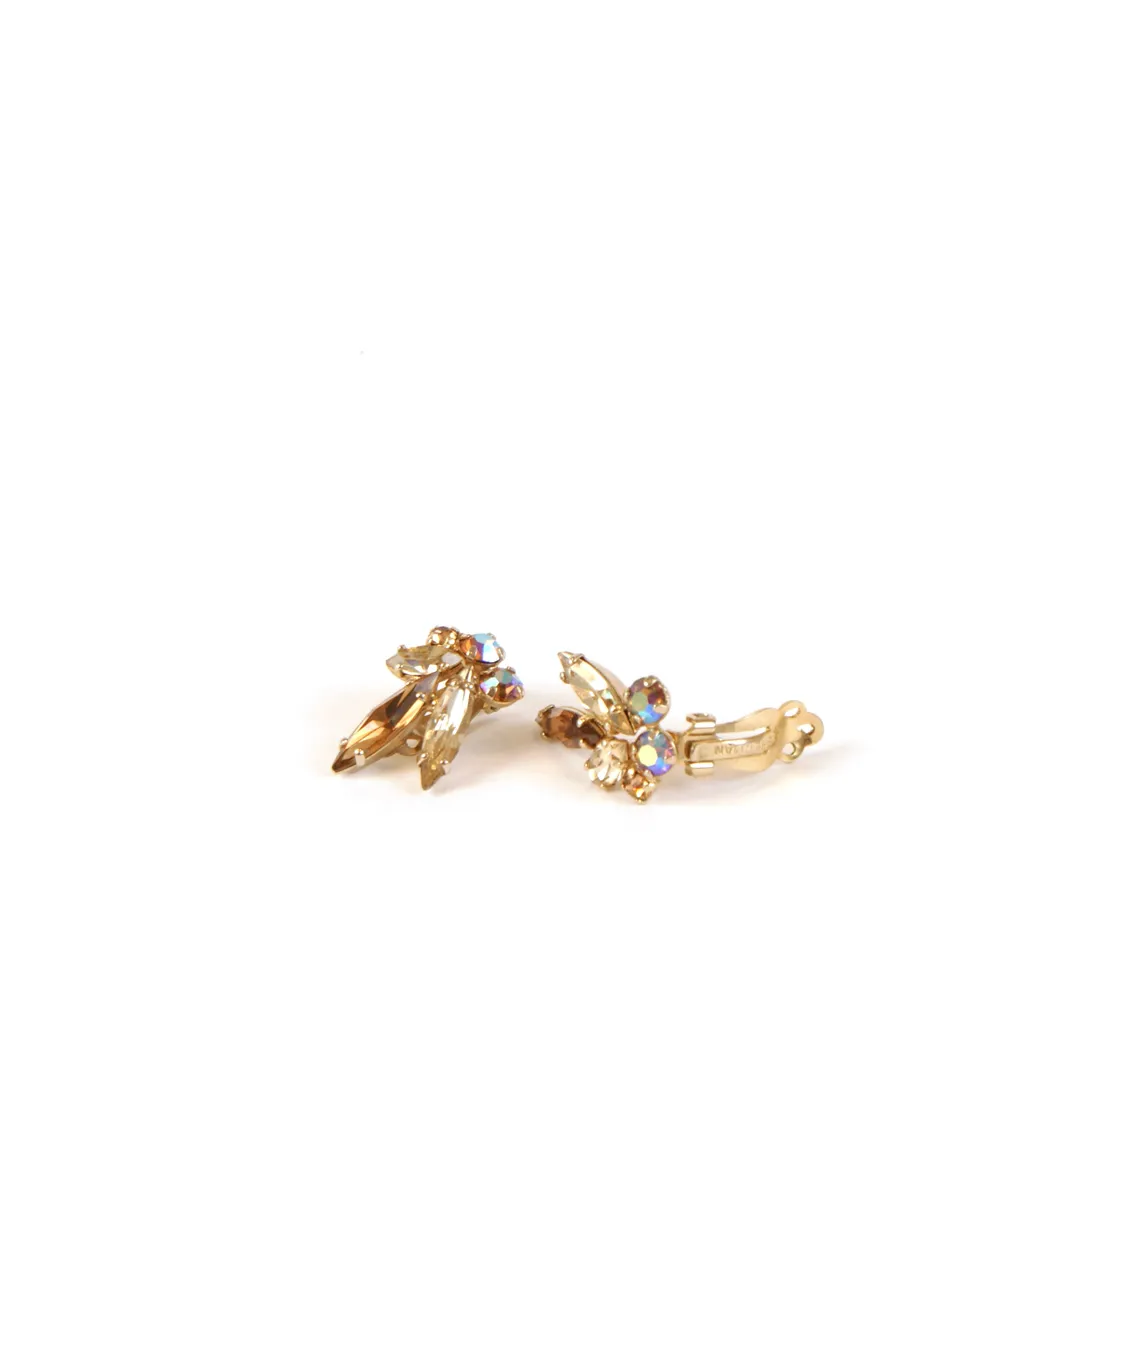 Sherman crystal earrings clip